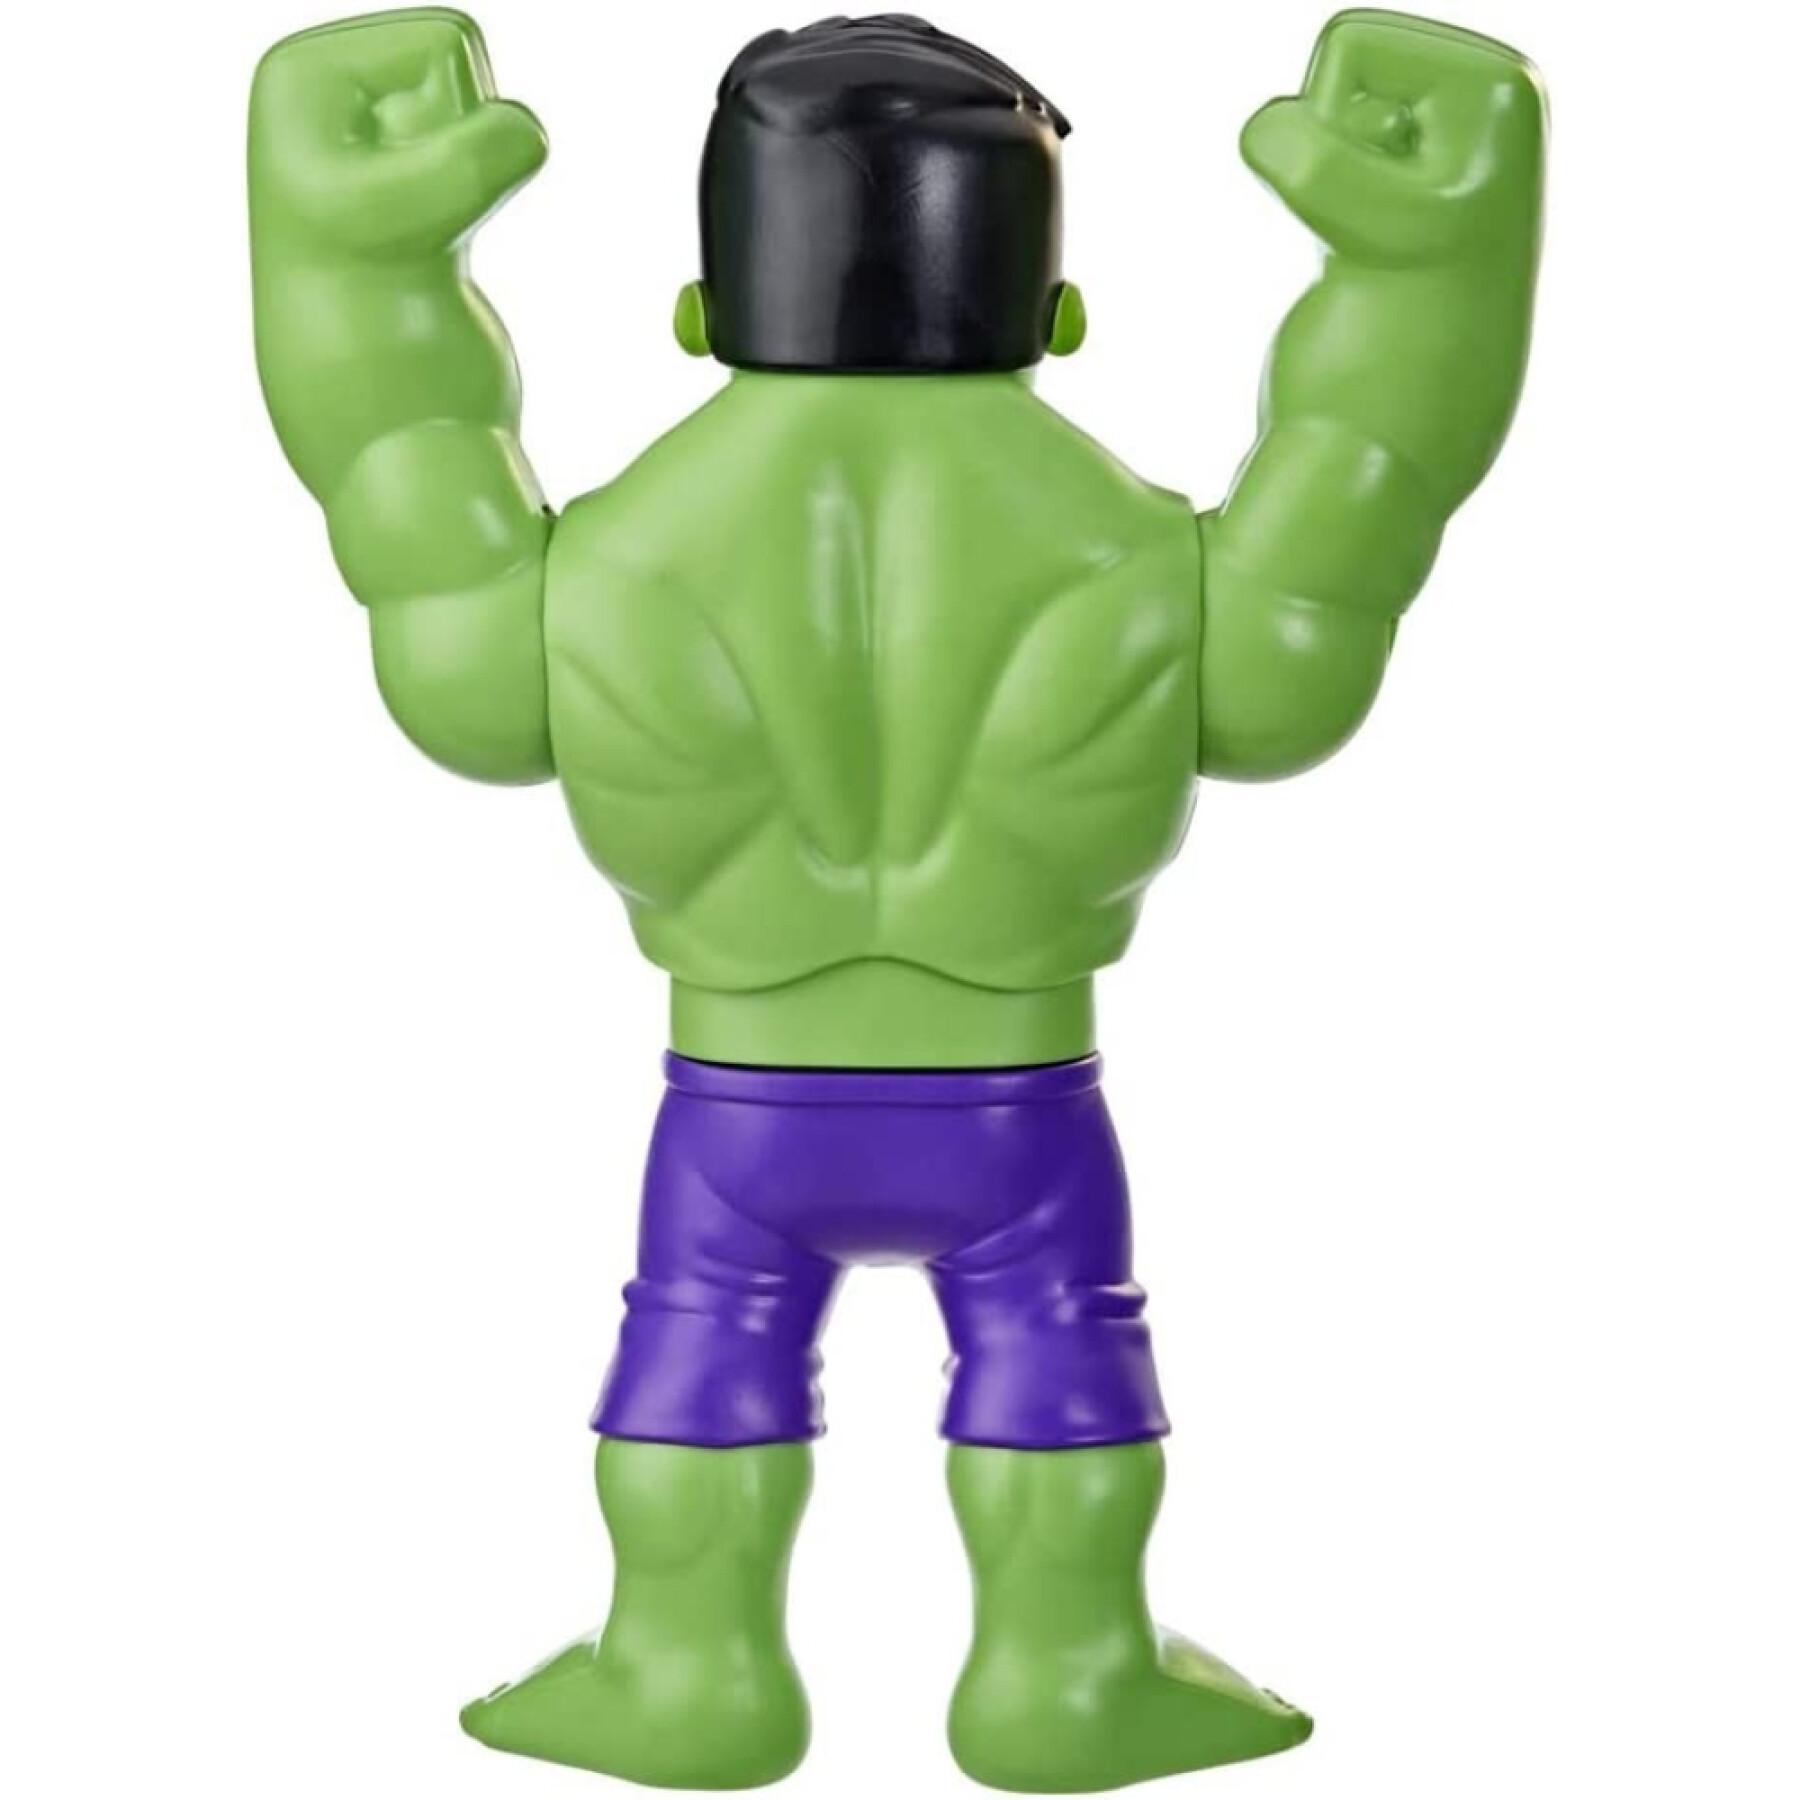 Figurine Marvel Spidey Mega Mighty Hulk con Gestos